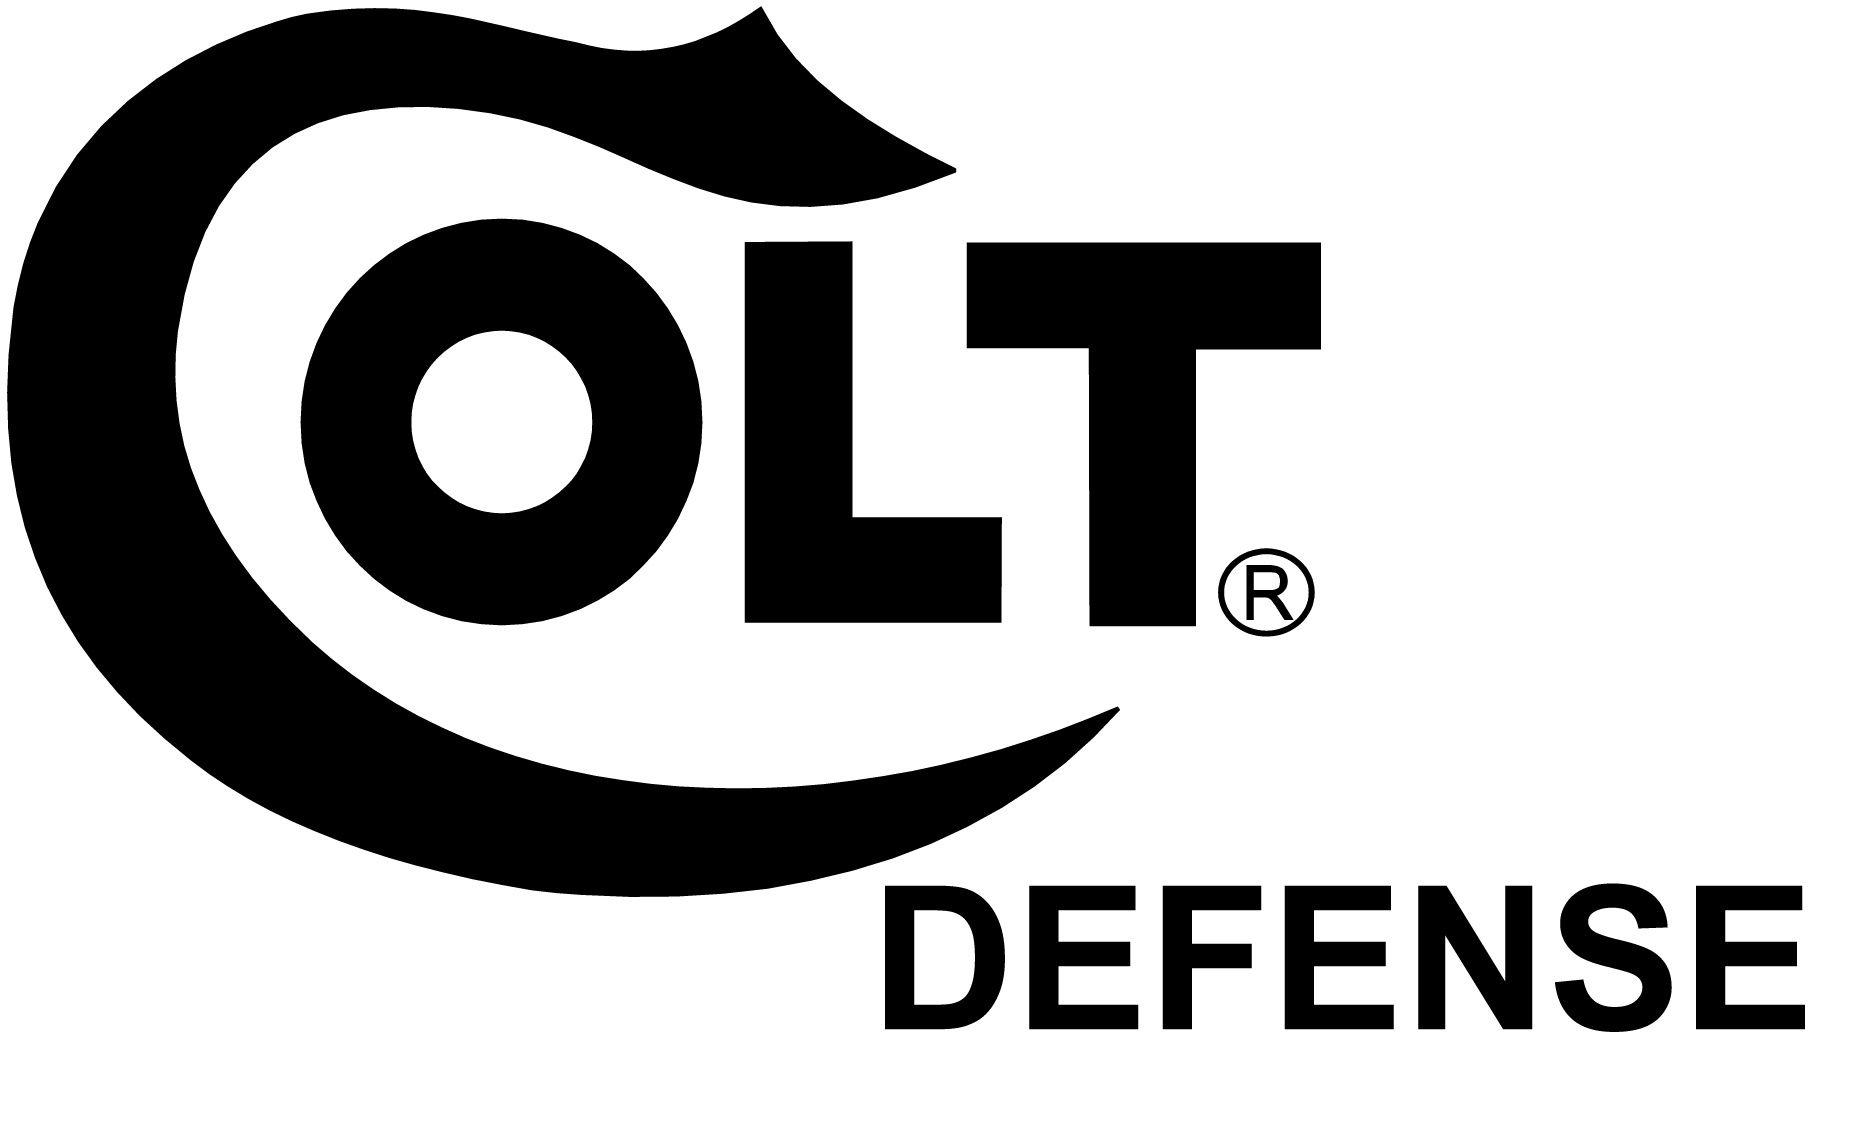 Colt Firearms Logo - Colt firearms Logos